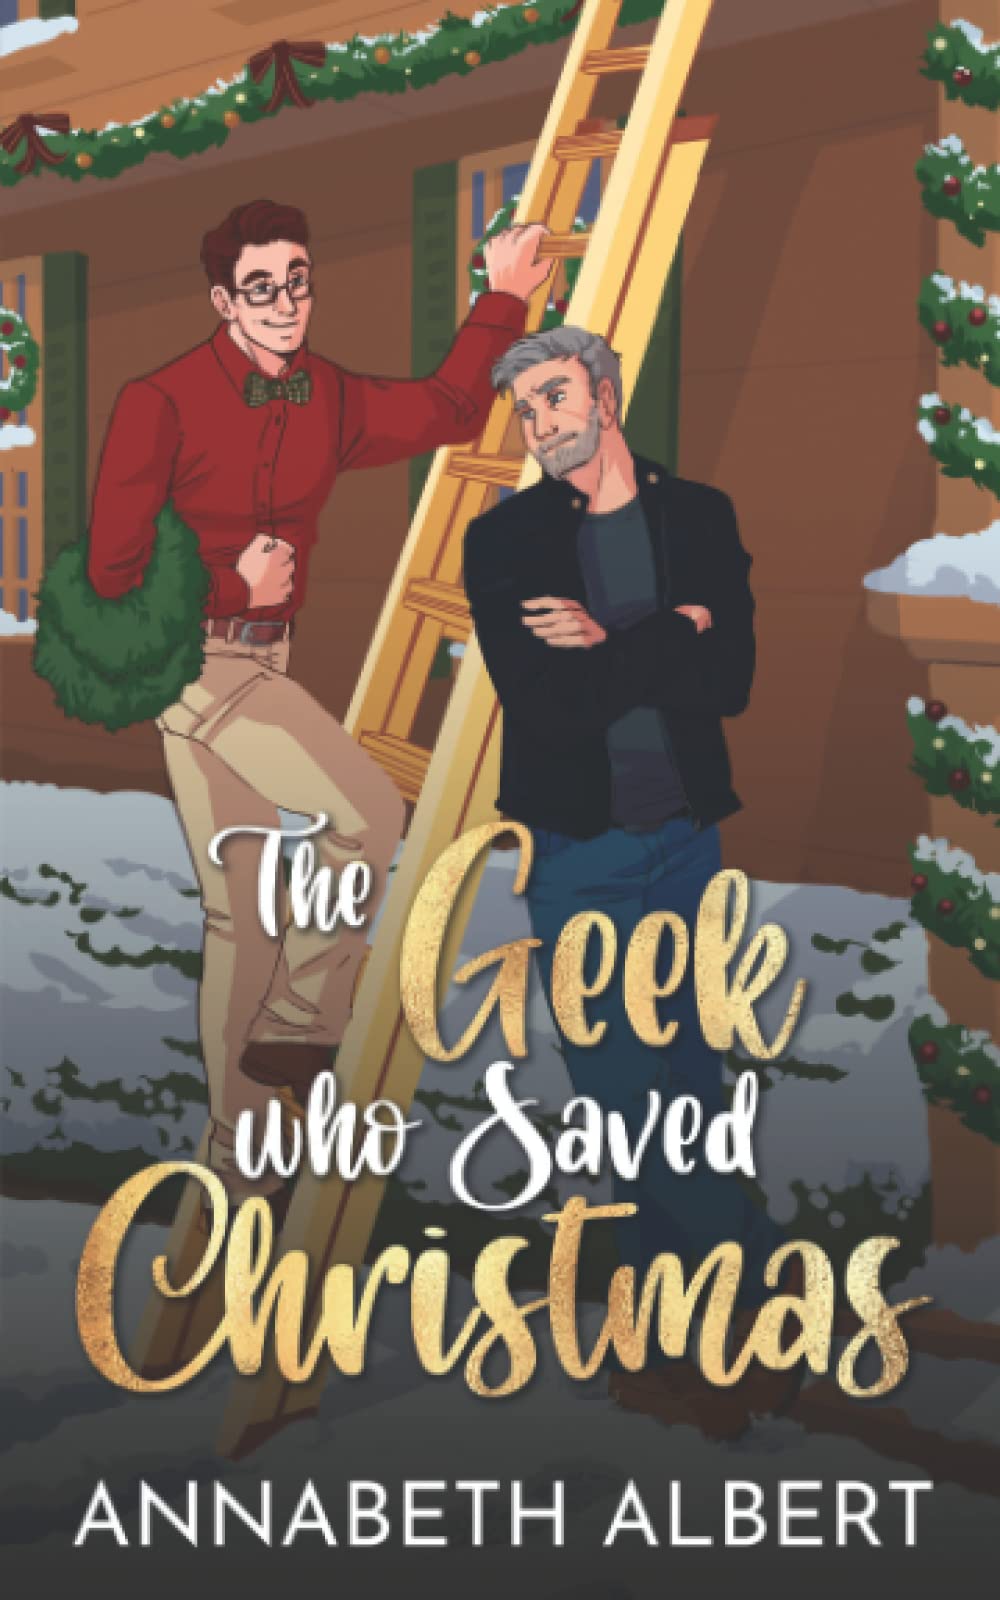 Book Geek Who Saved Christmas Annabeth Albert